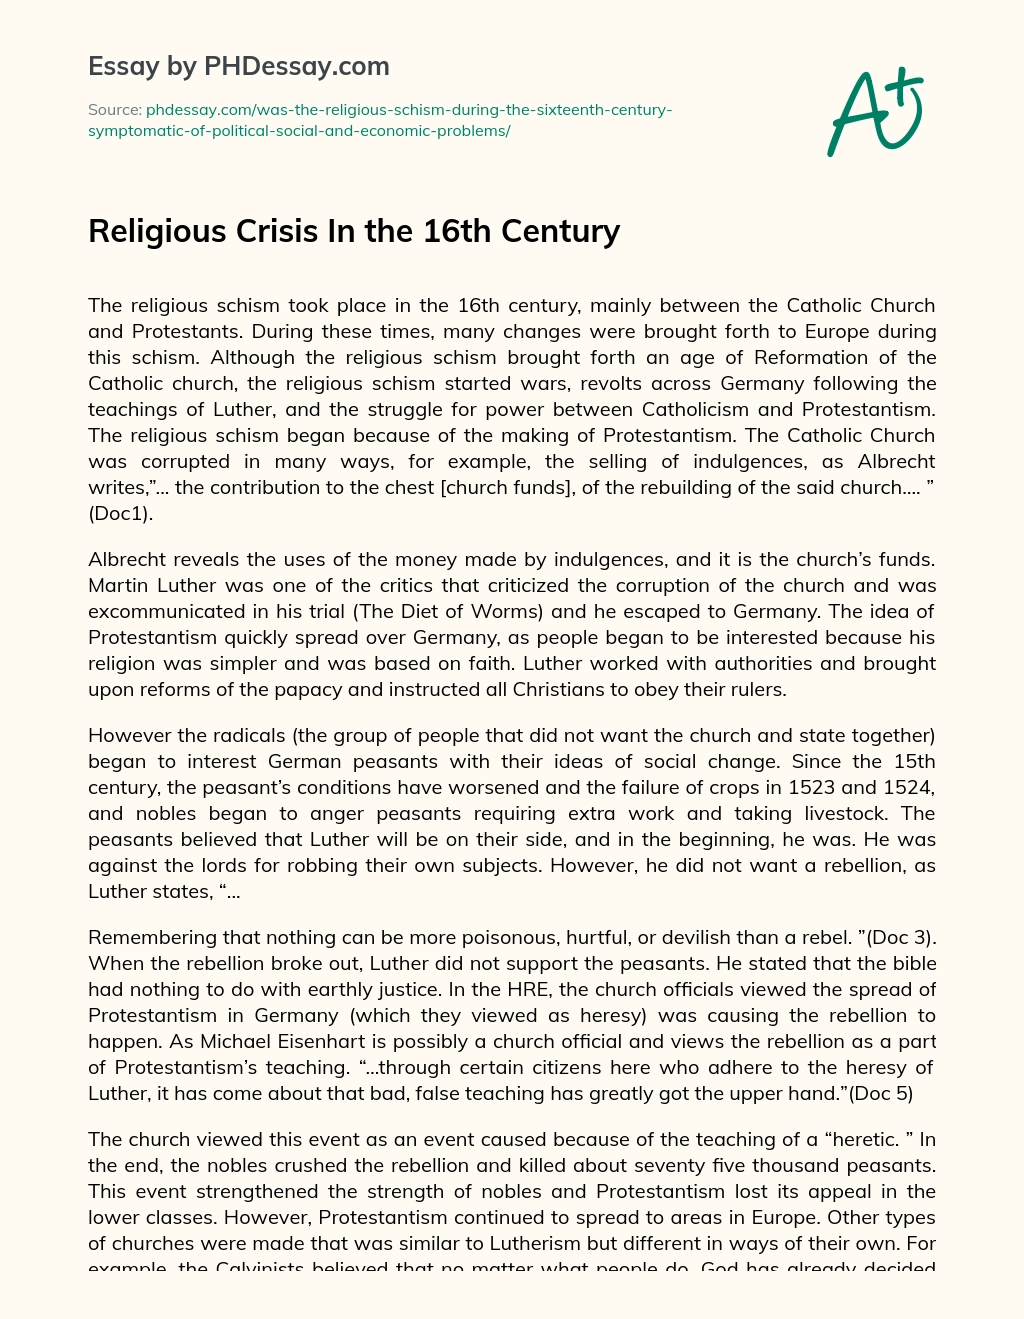 Religious Crisis In the 16th Century essay